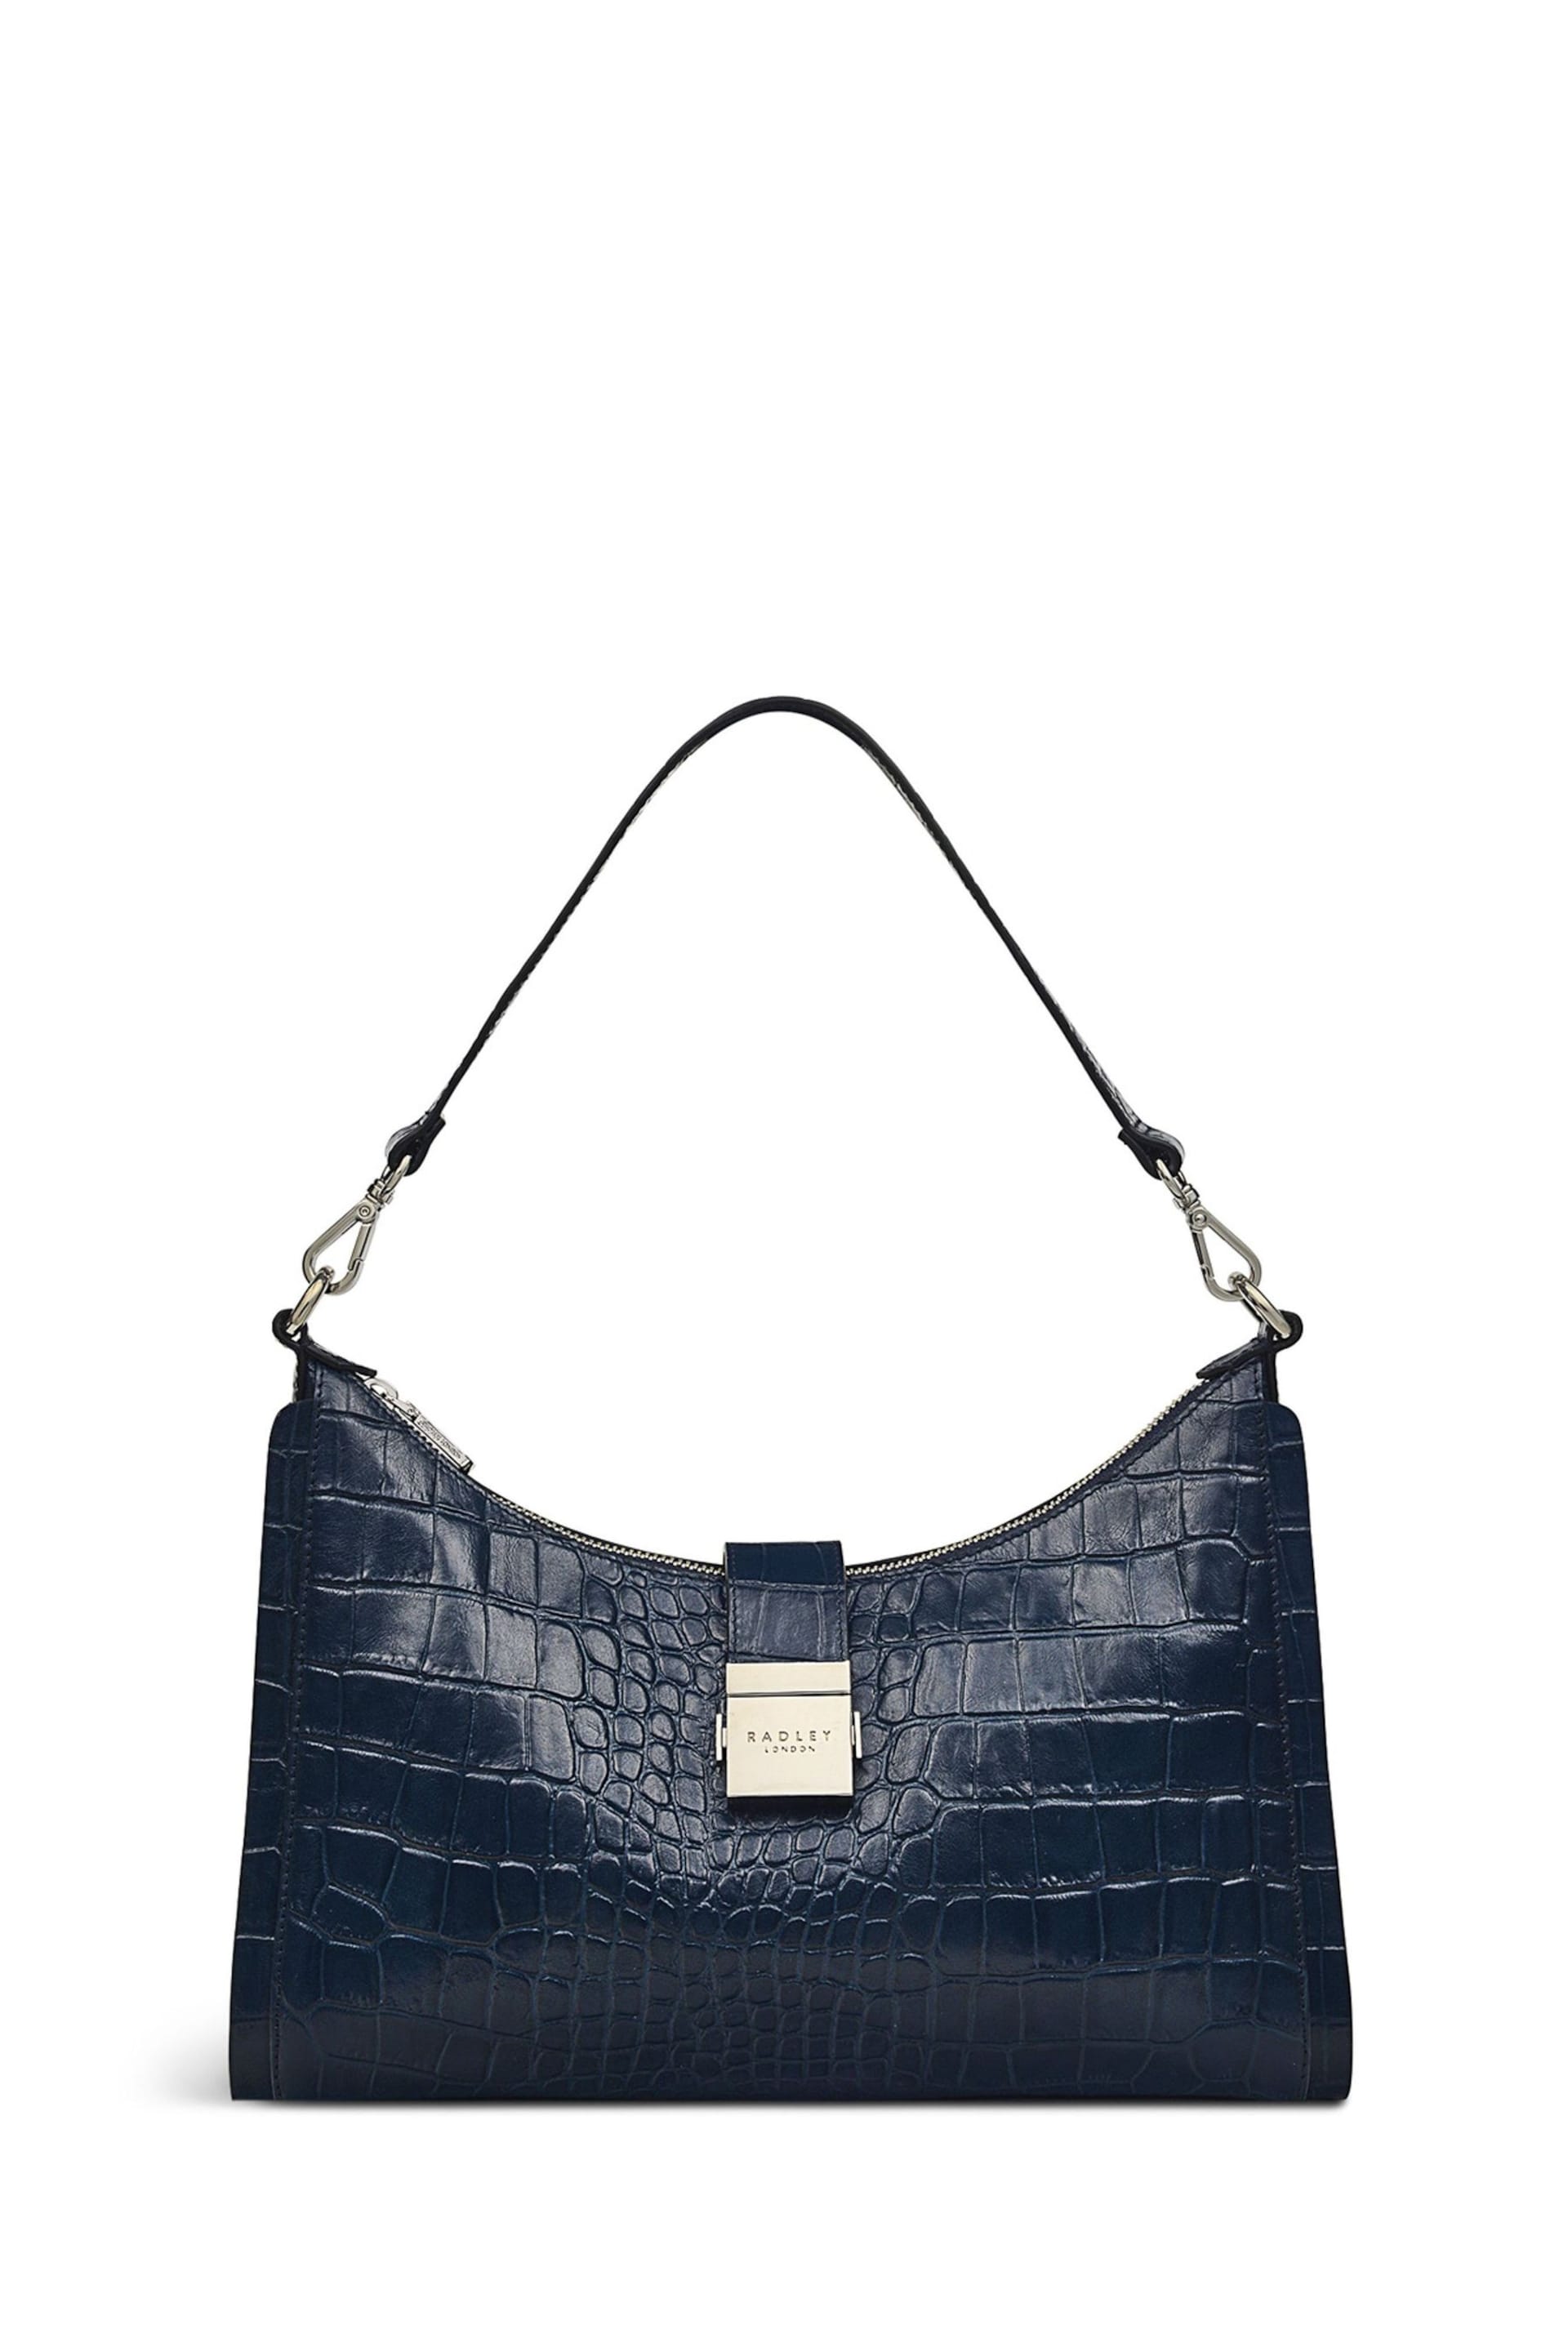 Radley London Blue Sloane Street Faux Croc Medium Zip Top Shoulder Bag - Image 2 of 5